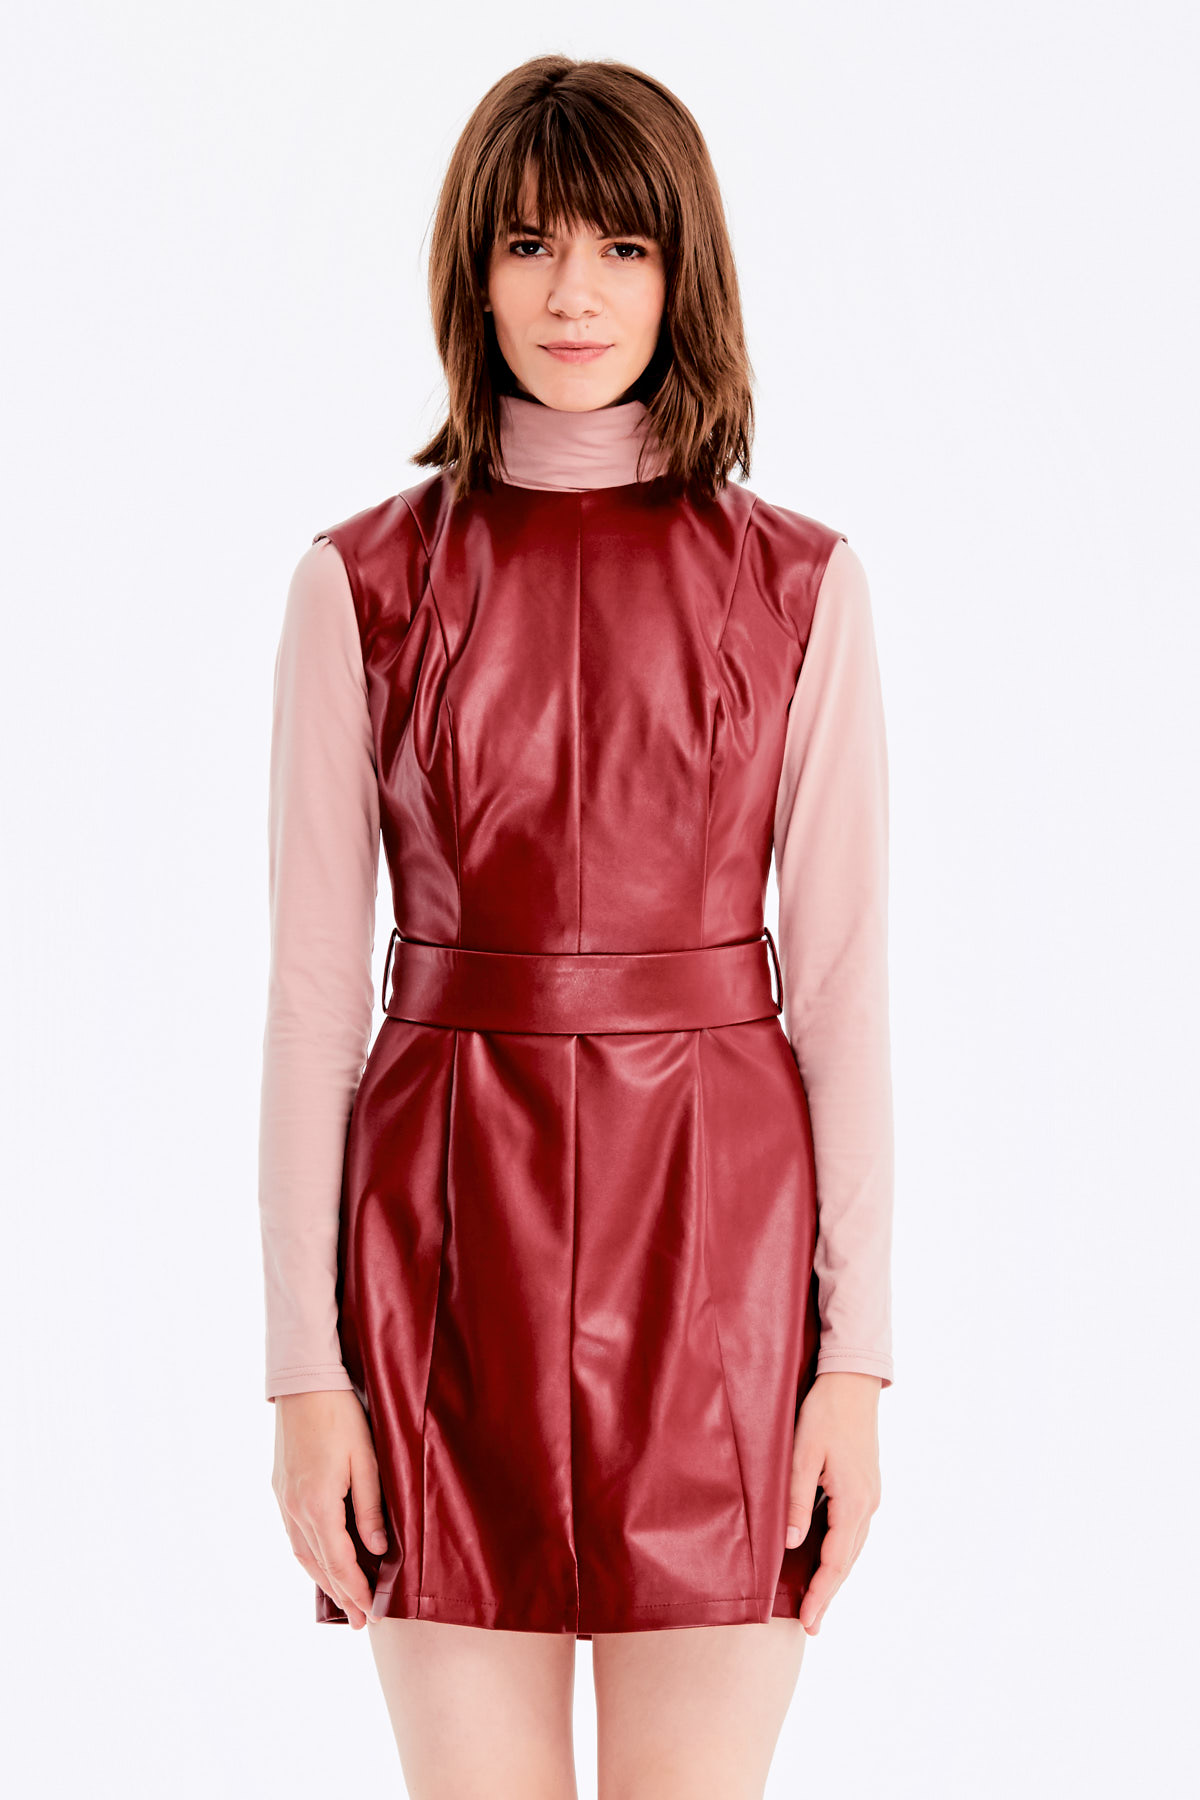 Below-knee burgundy leather dress , photo 2